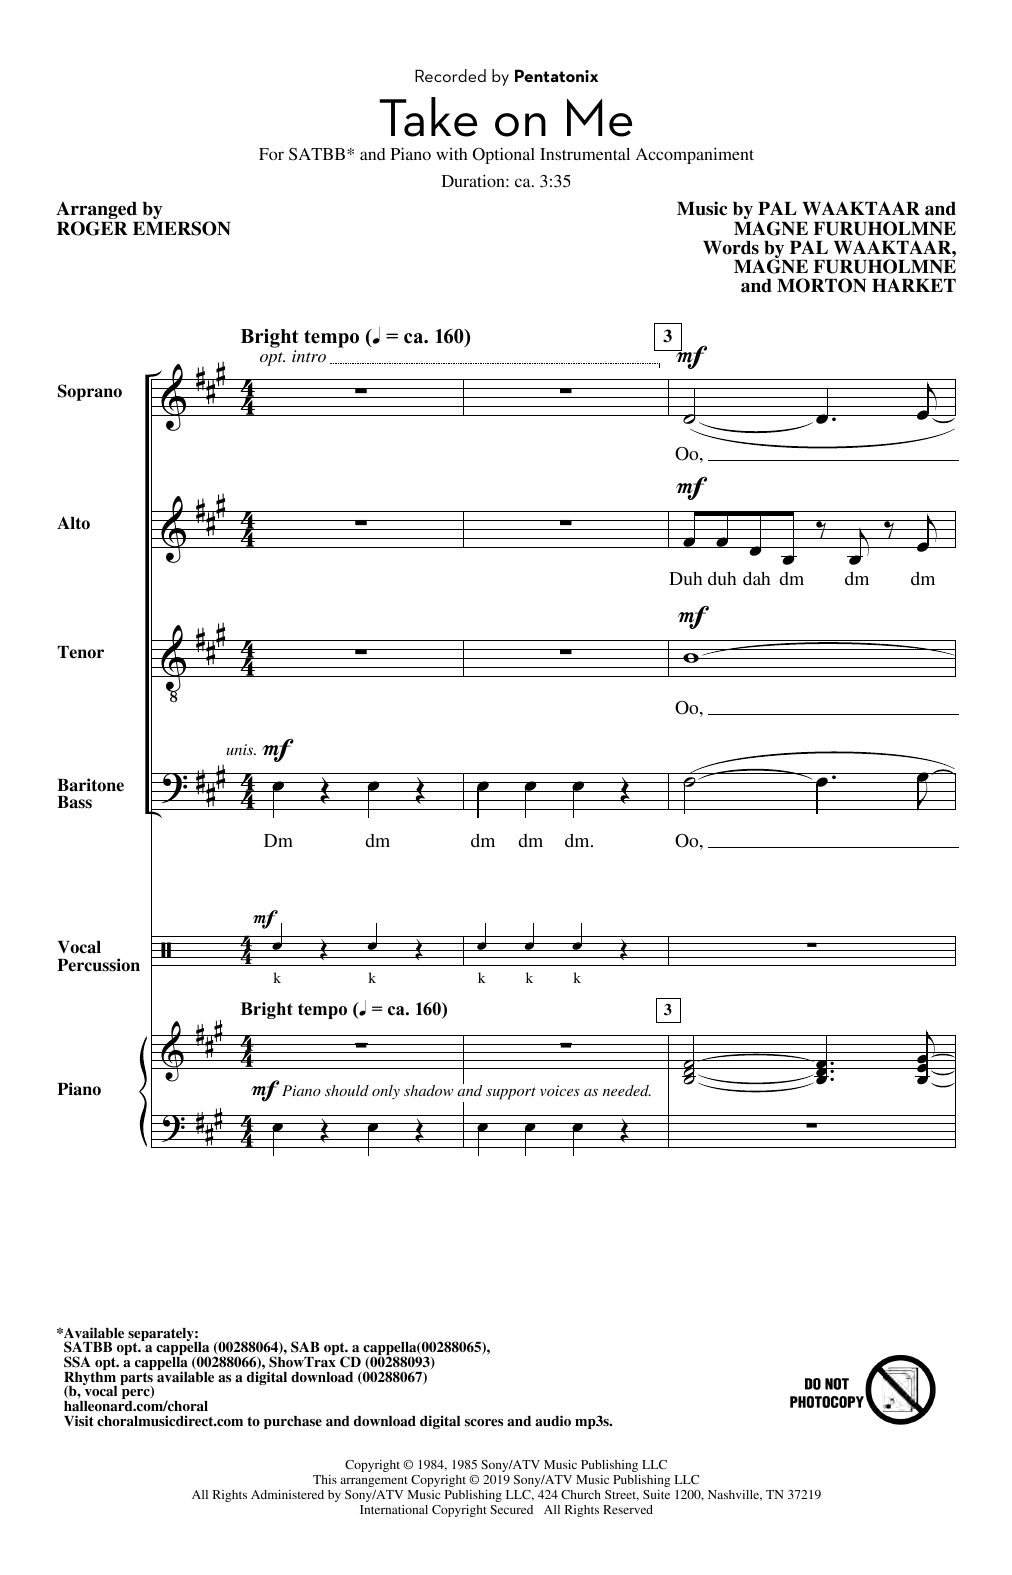 Pentatonix Take On Me (arr. Roger Emerson) Sheet Music Notes & Chords for SATB Choir - Download or Print PDF